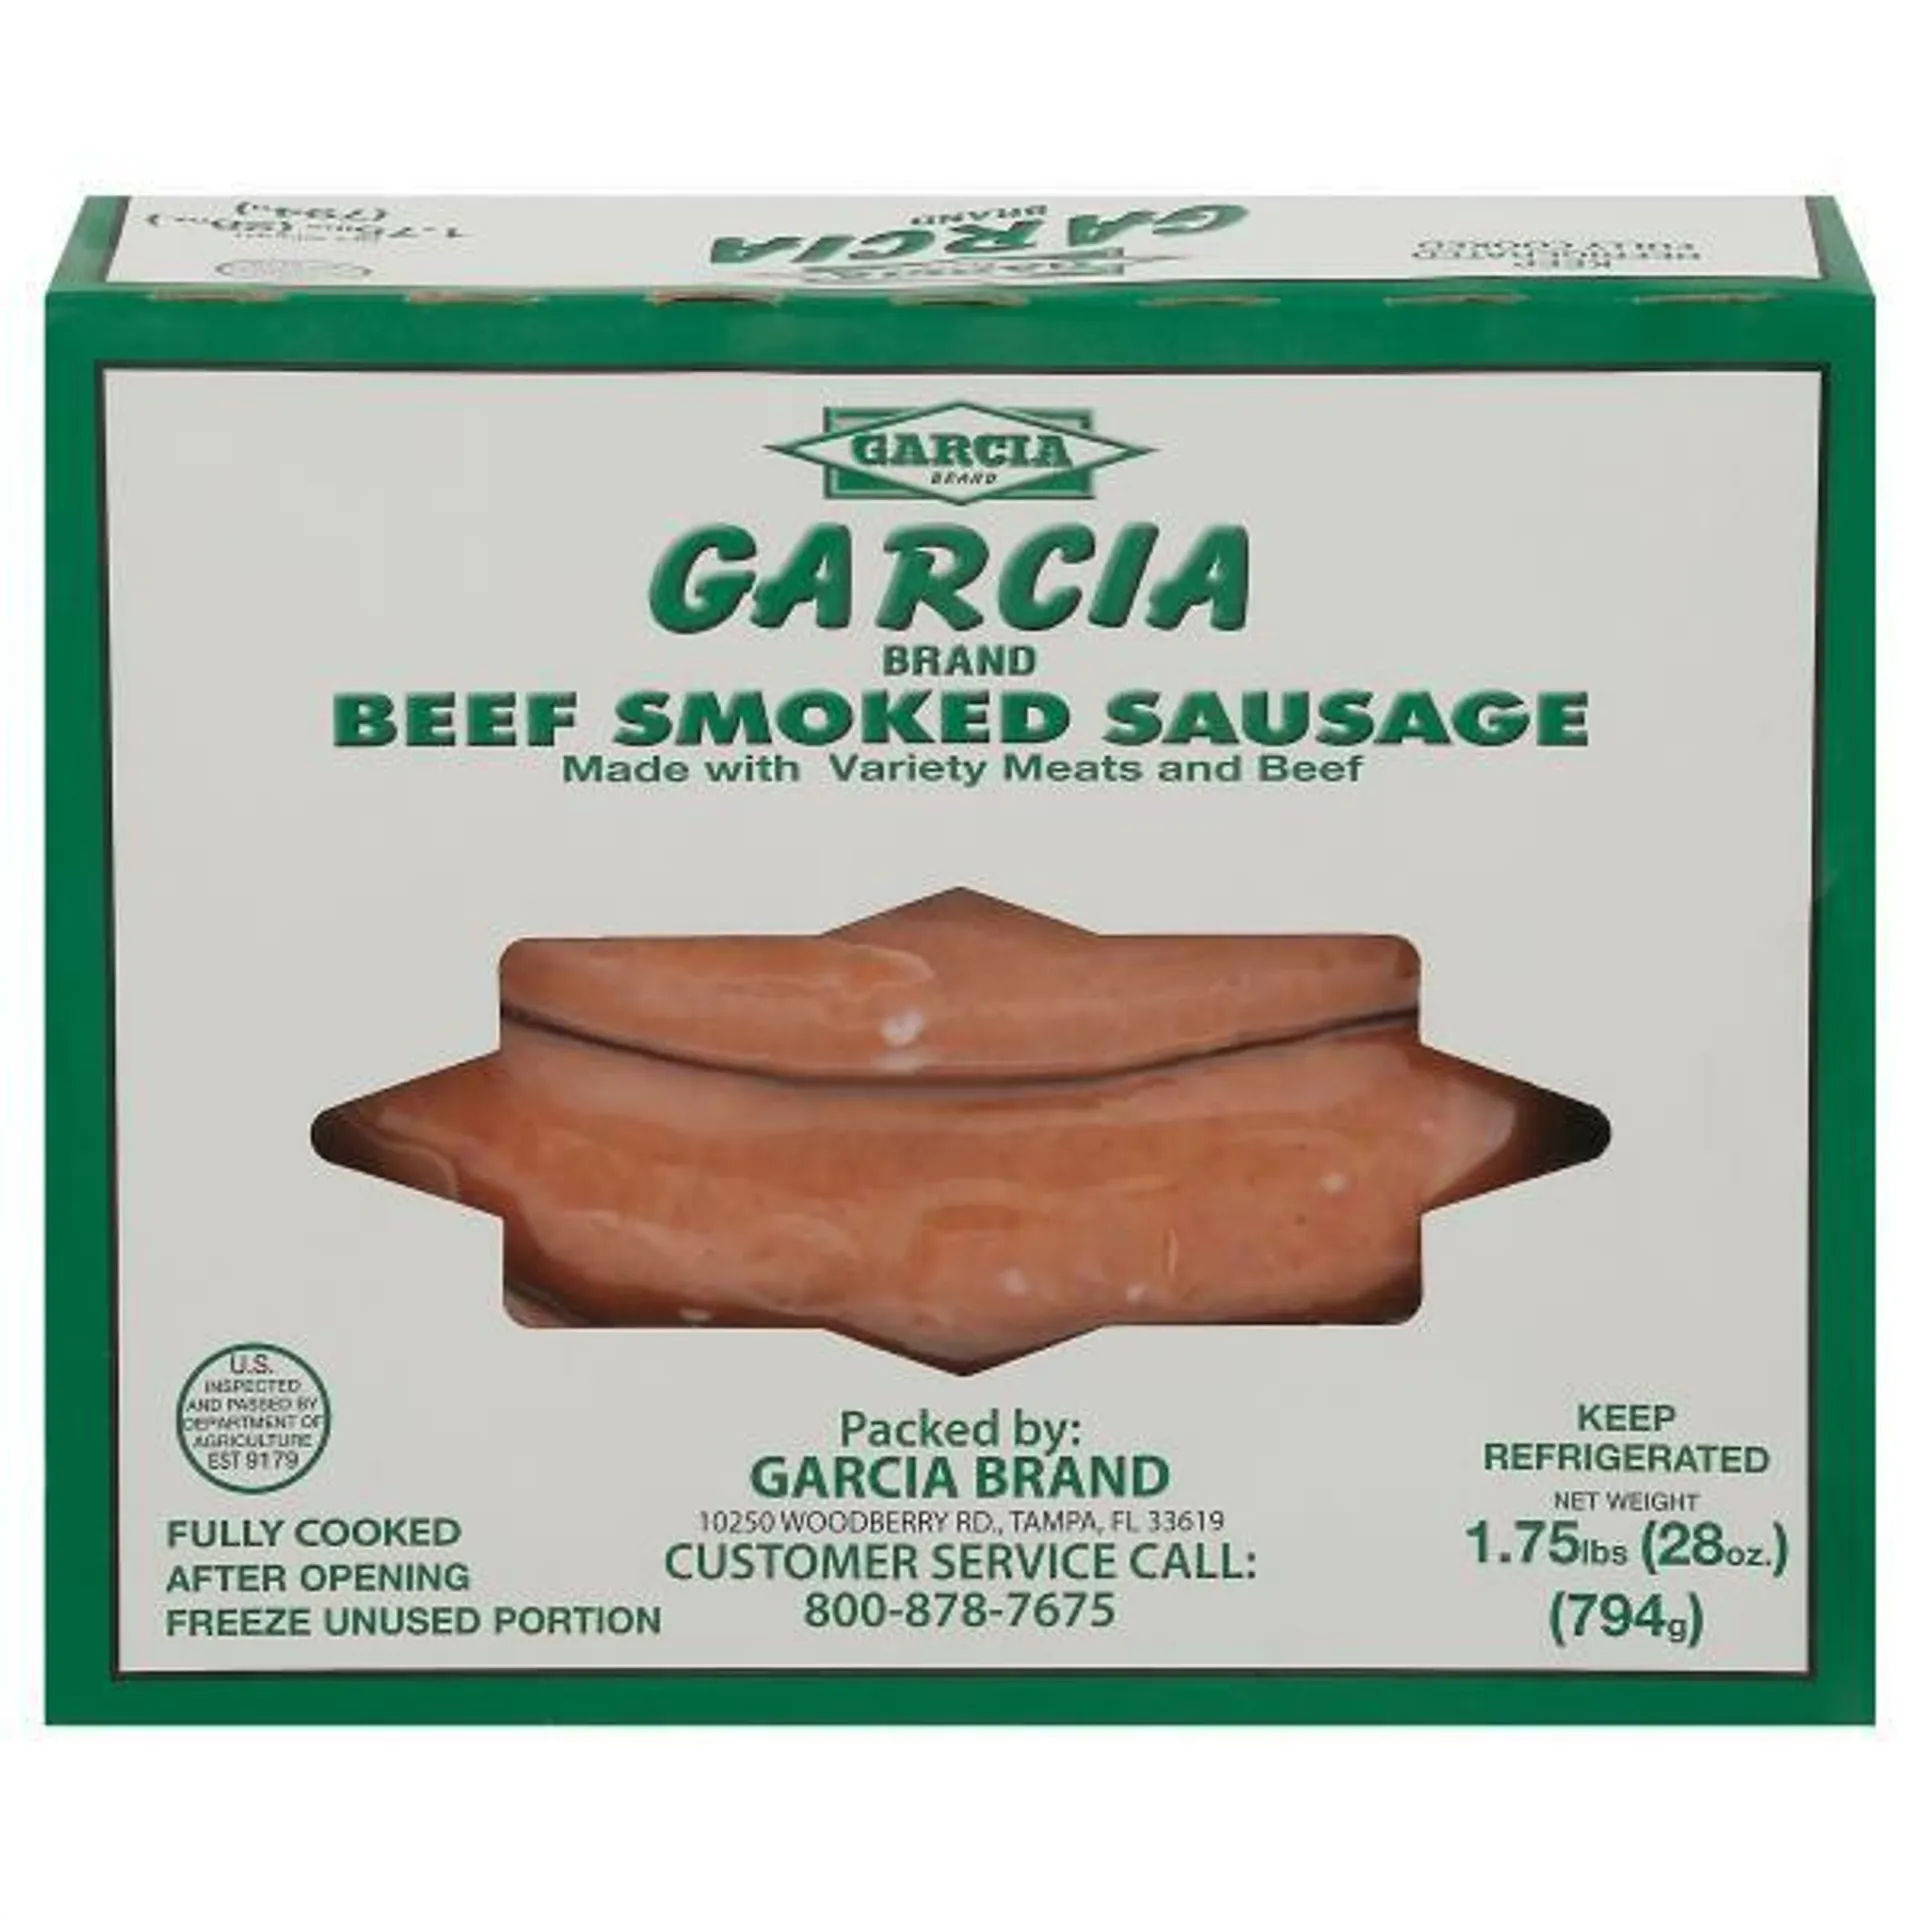 Garcia Brand Smoked Sausage, Beef